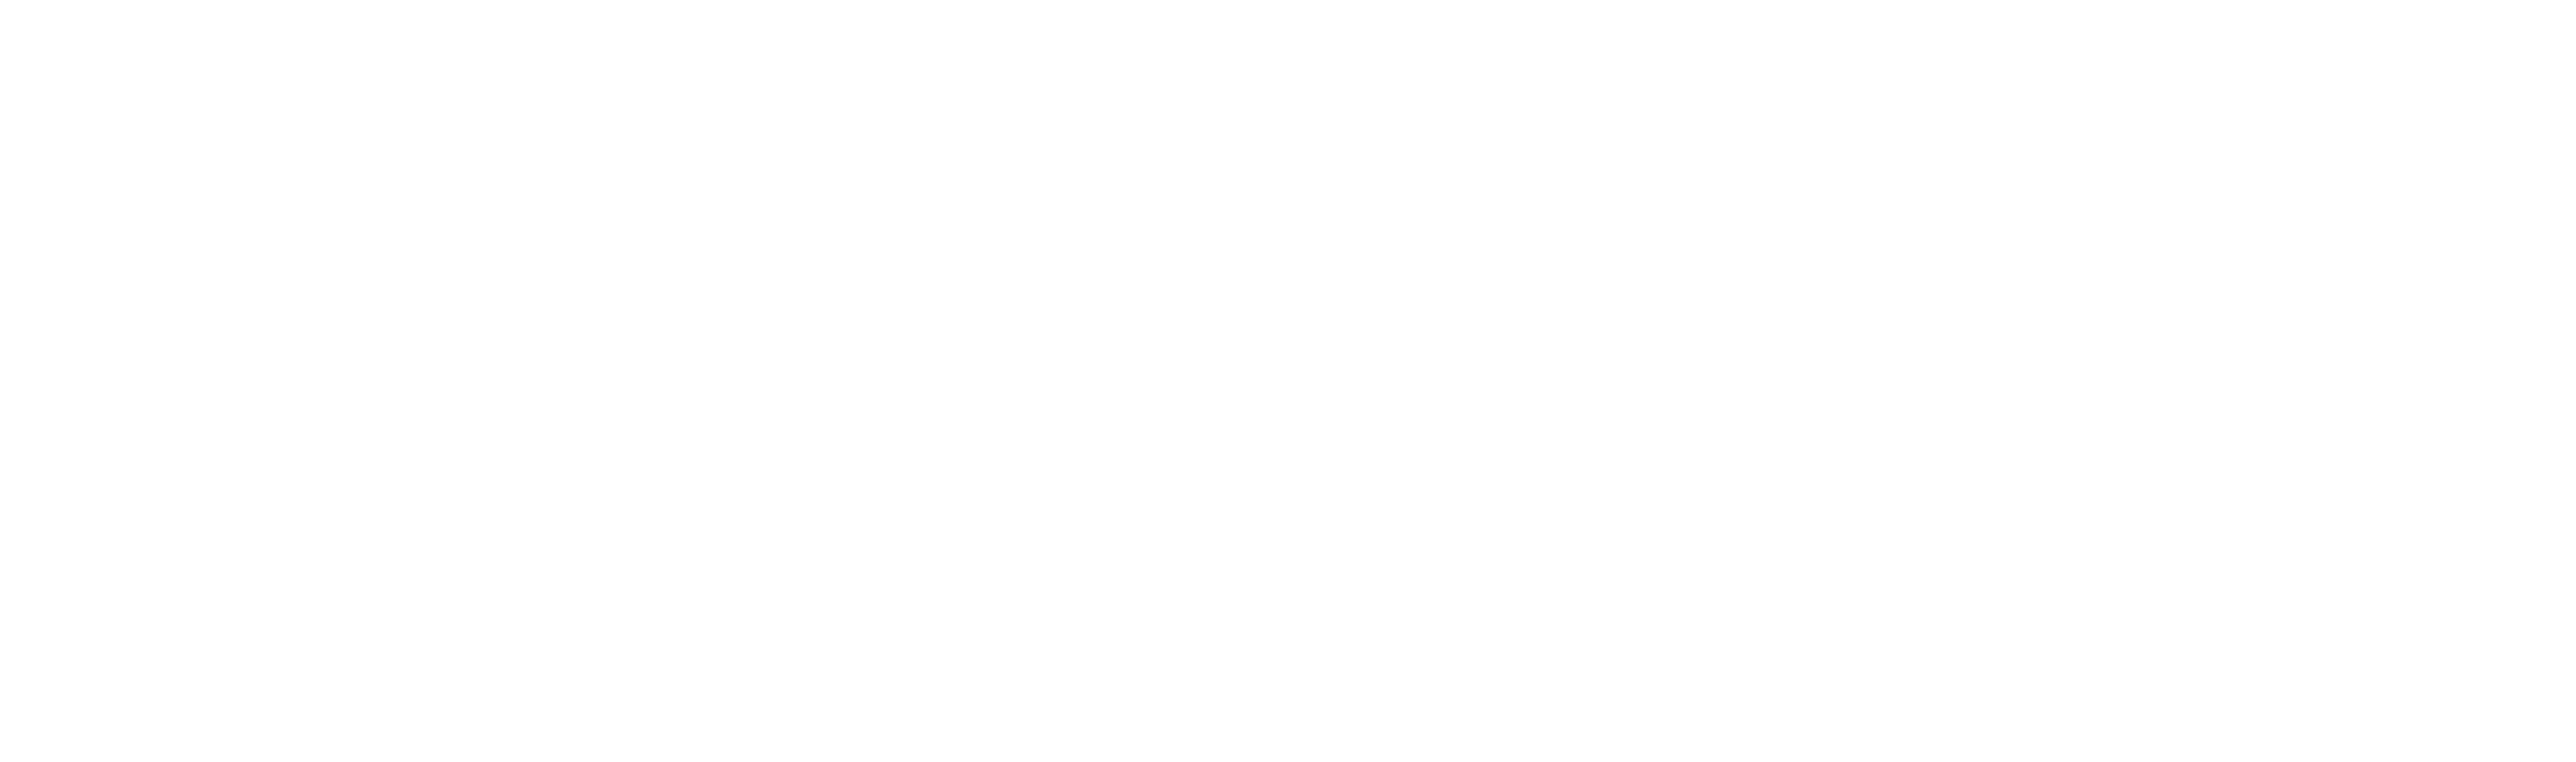 Bobsled_Acadia_Logo_Reversed